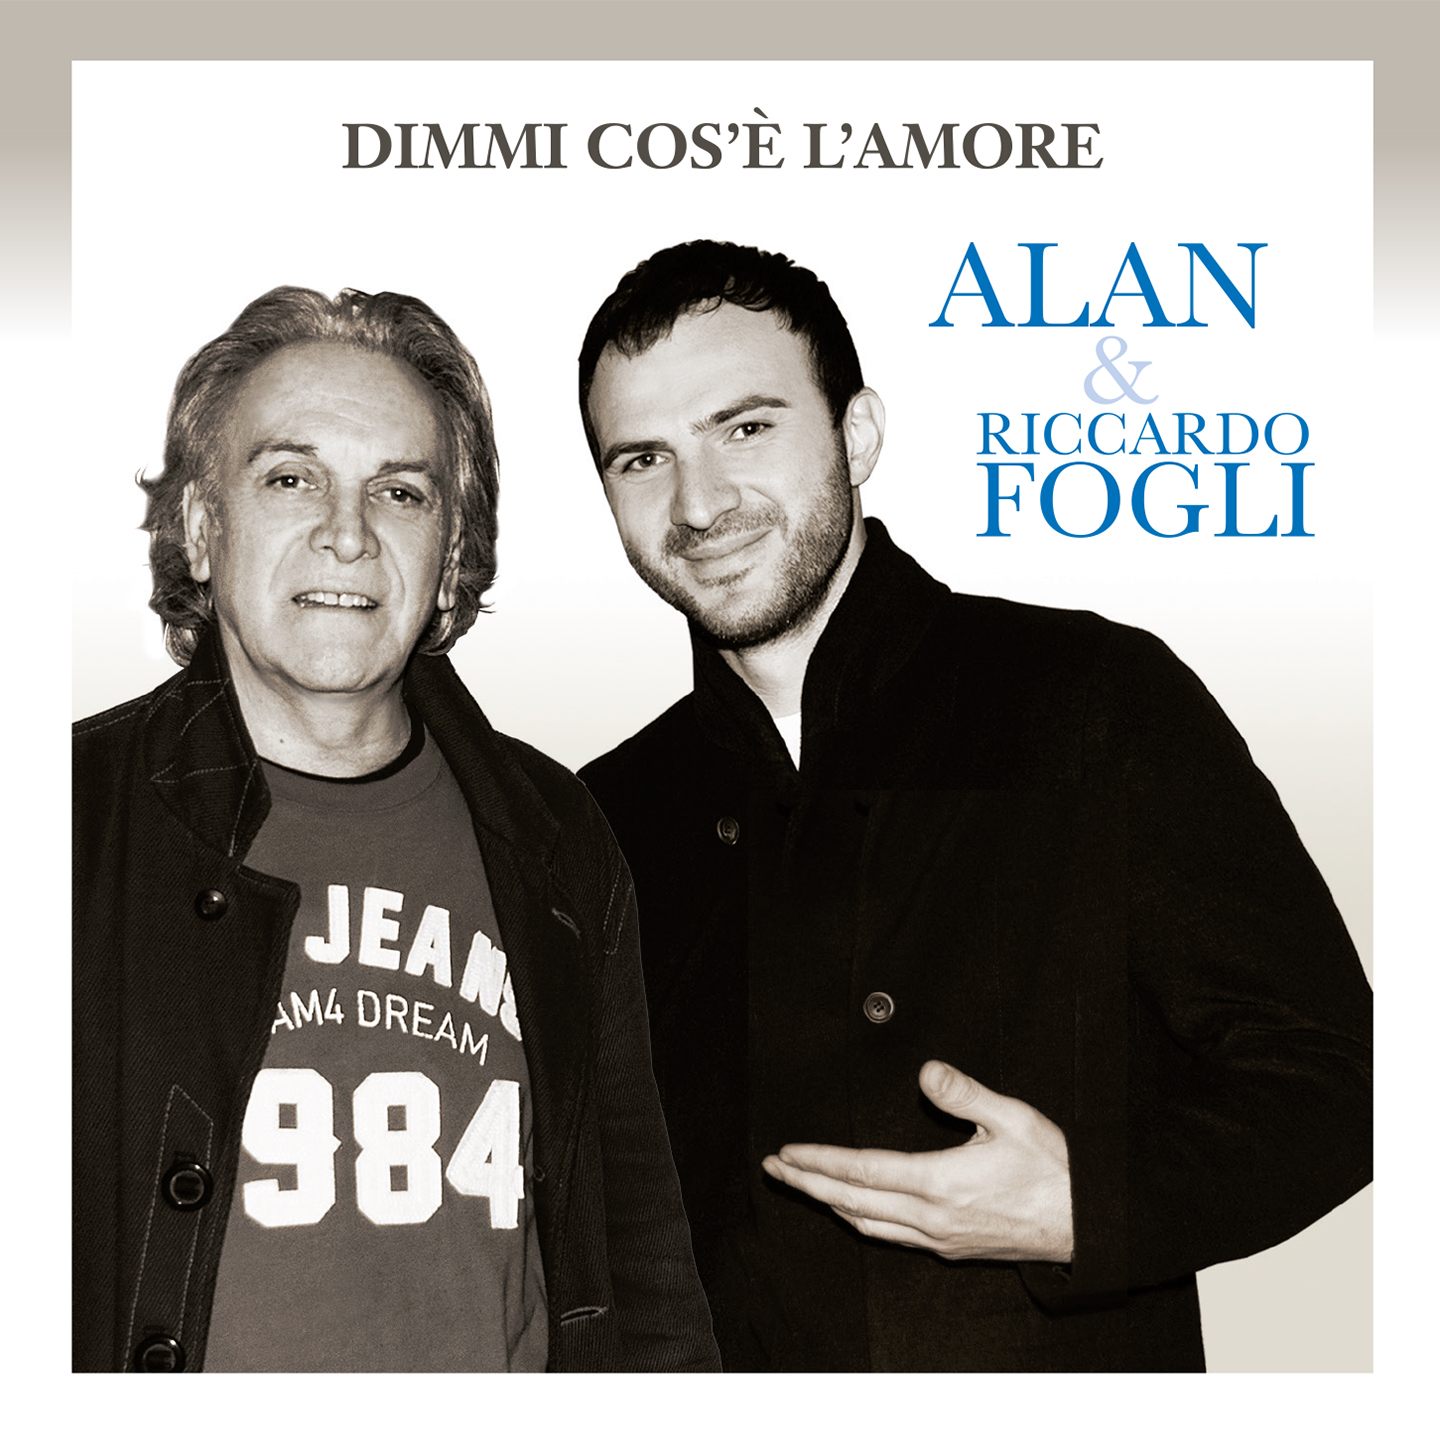 Alan & Riccardo Fogli - Dimmi cos'è l'amore